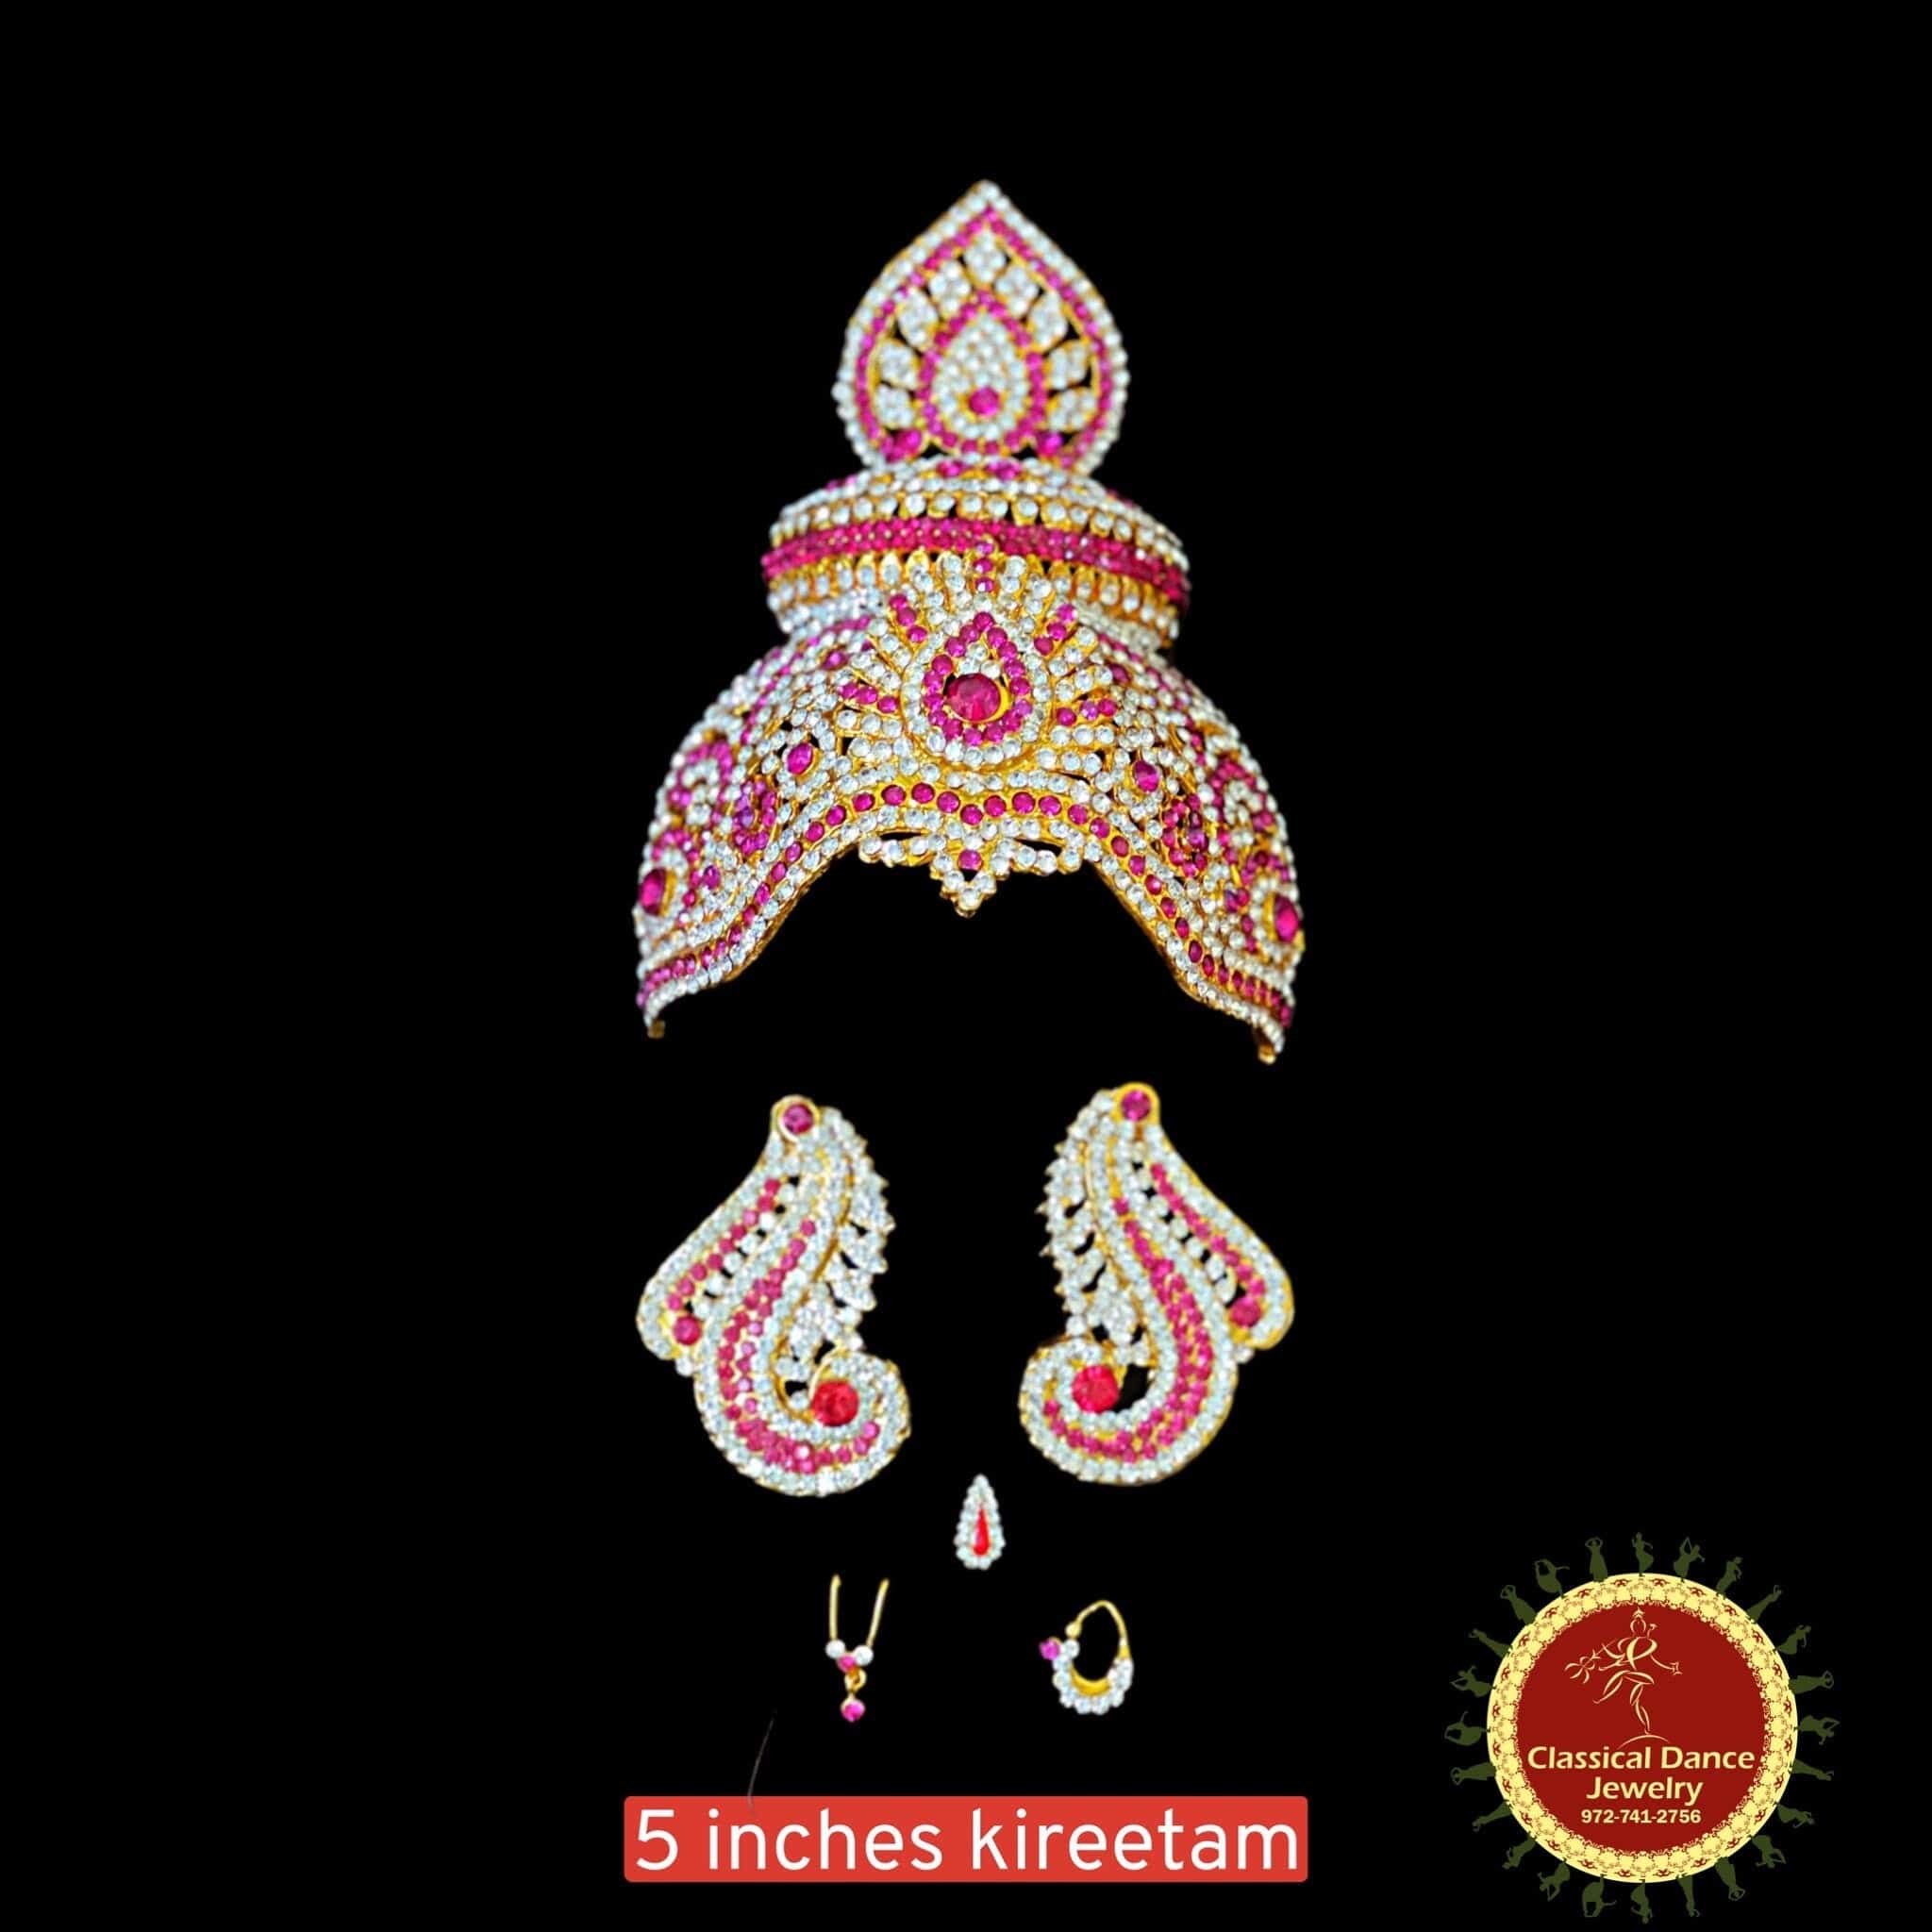 Kireetam/Crown – The Pooja Store